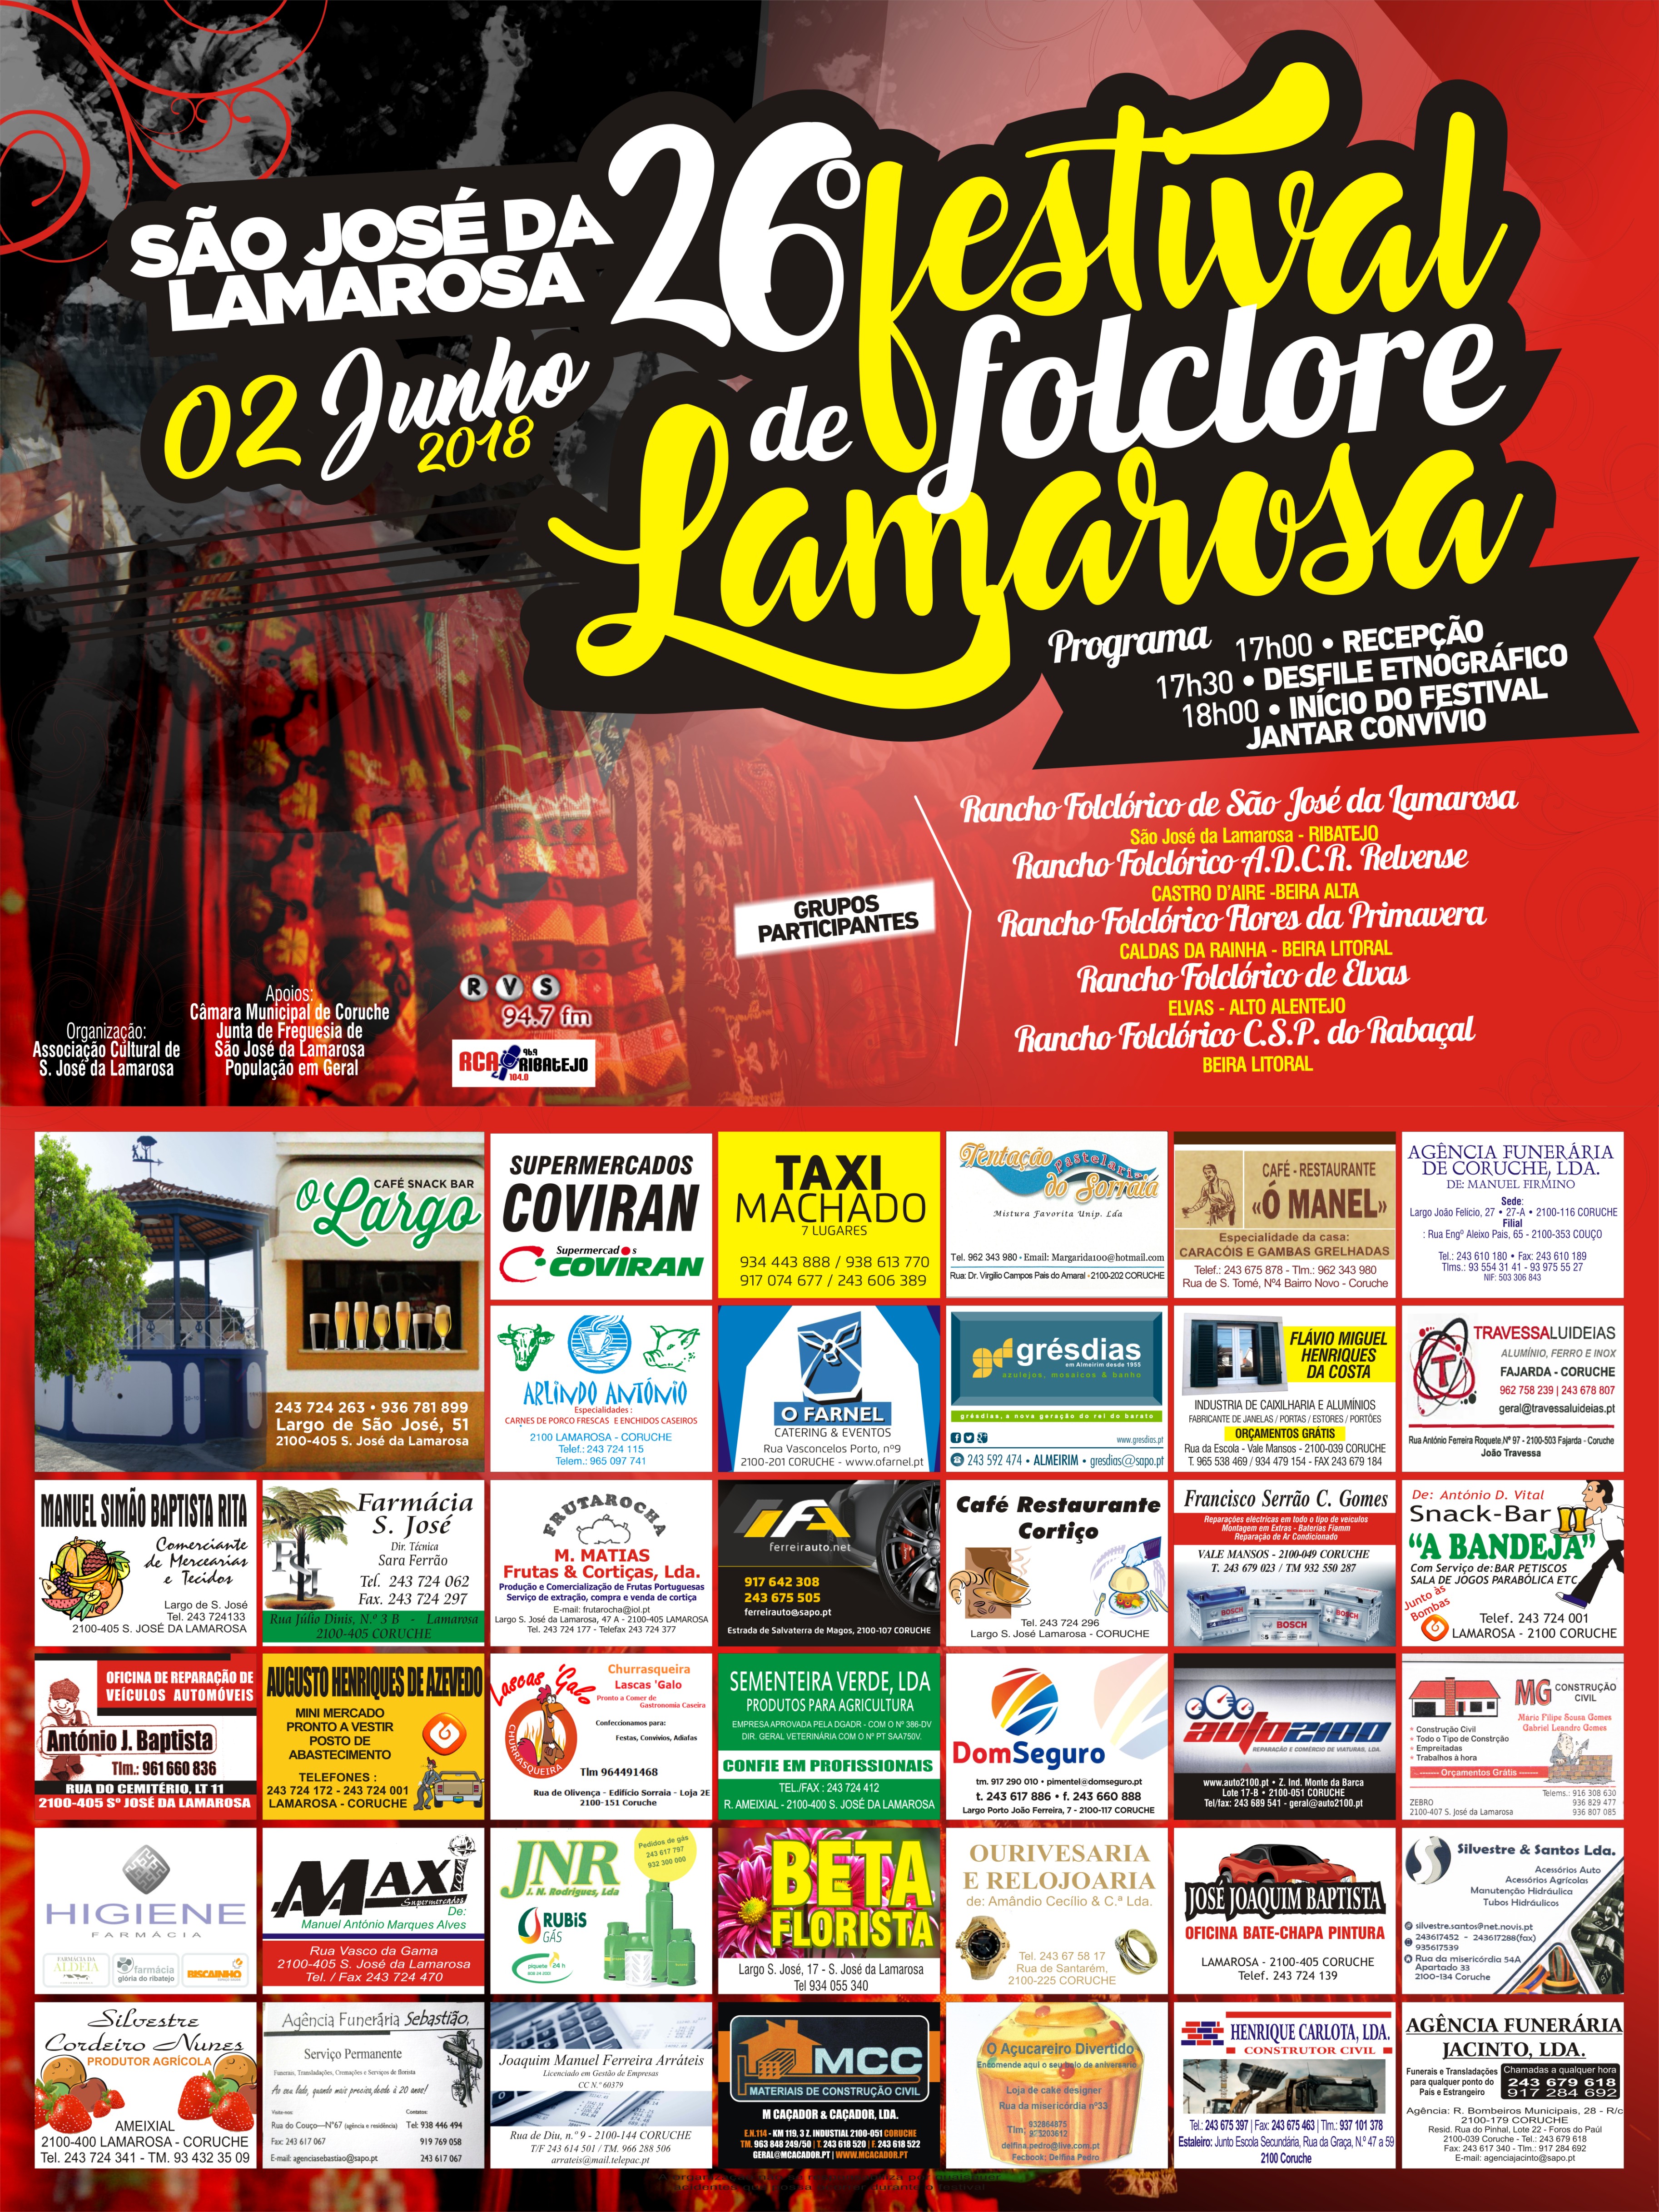 26.º Festival de Folclore de Lamarosa – Associação Cultural de São José da Lamarosa